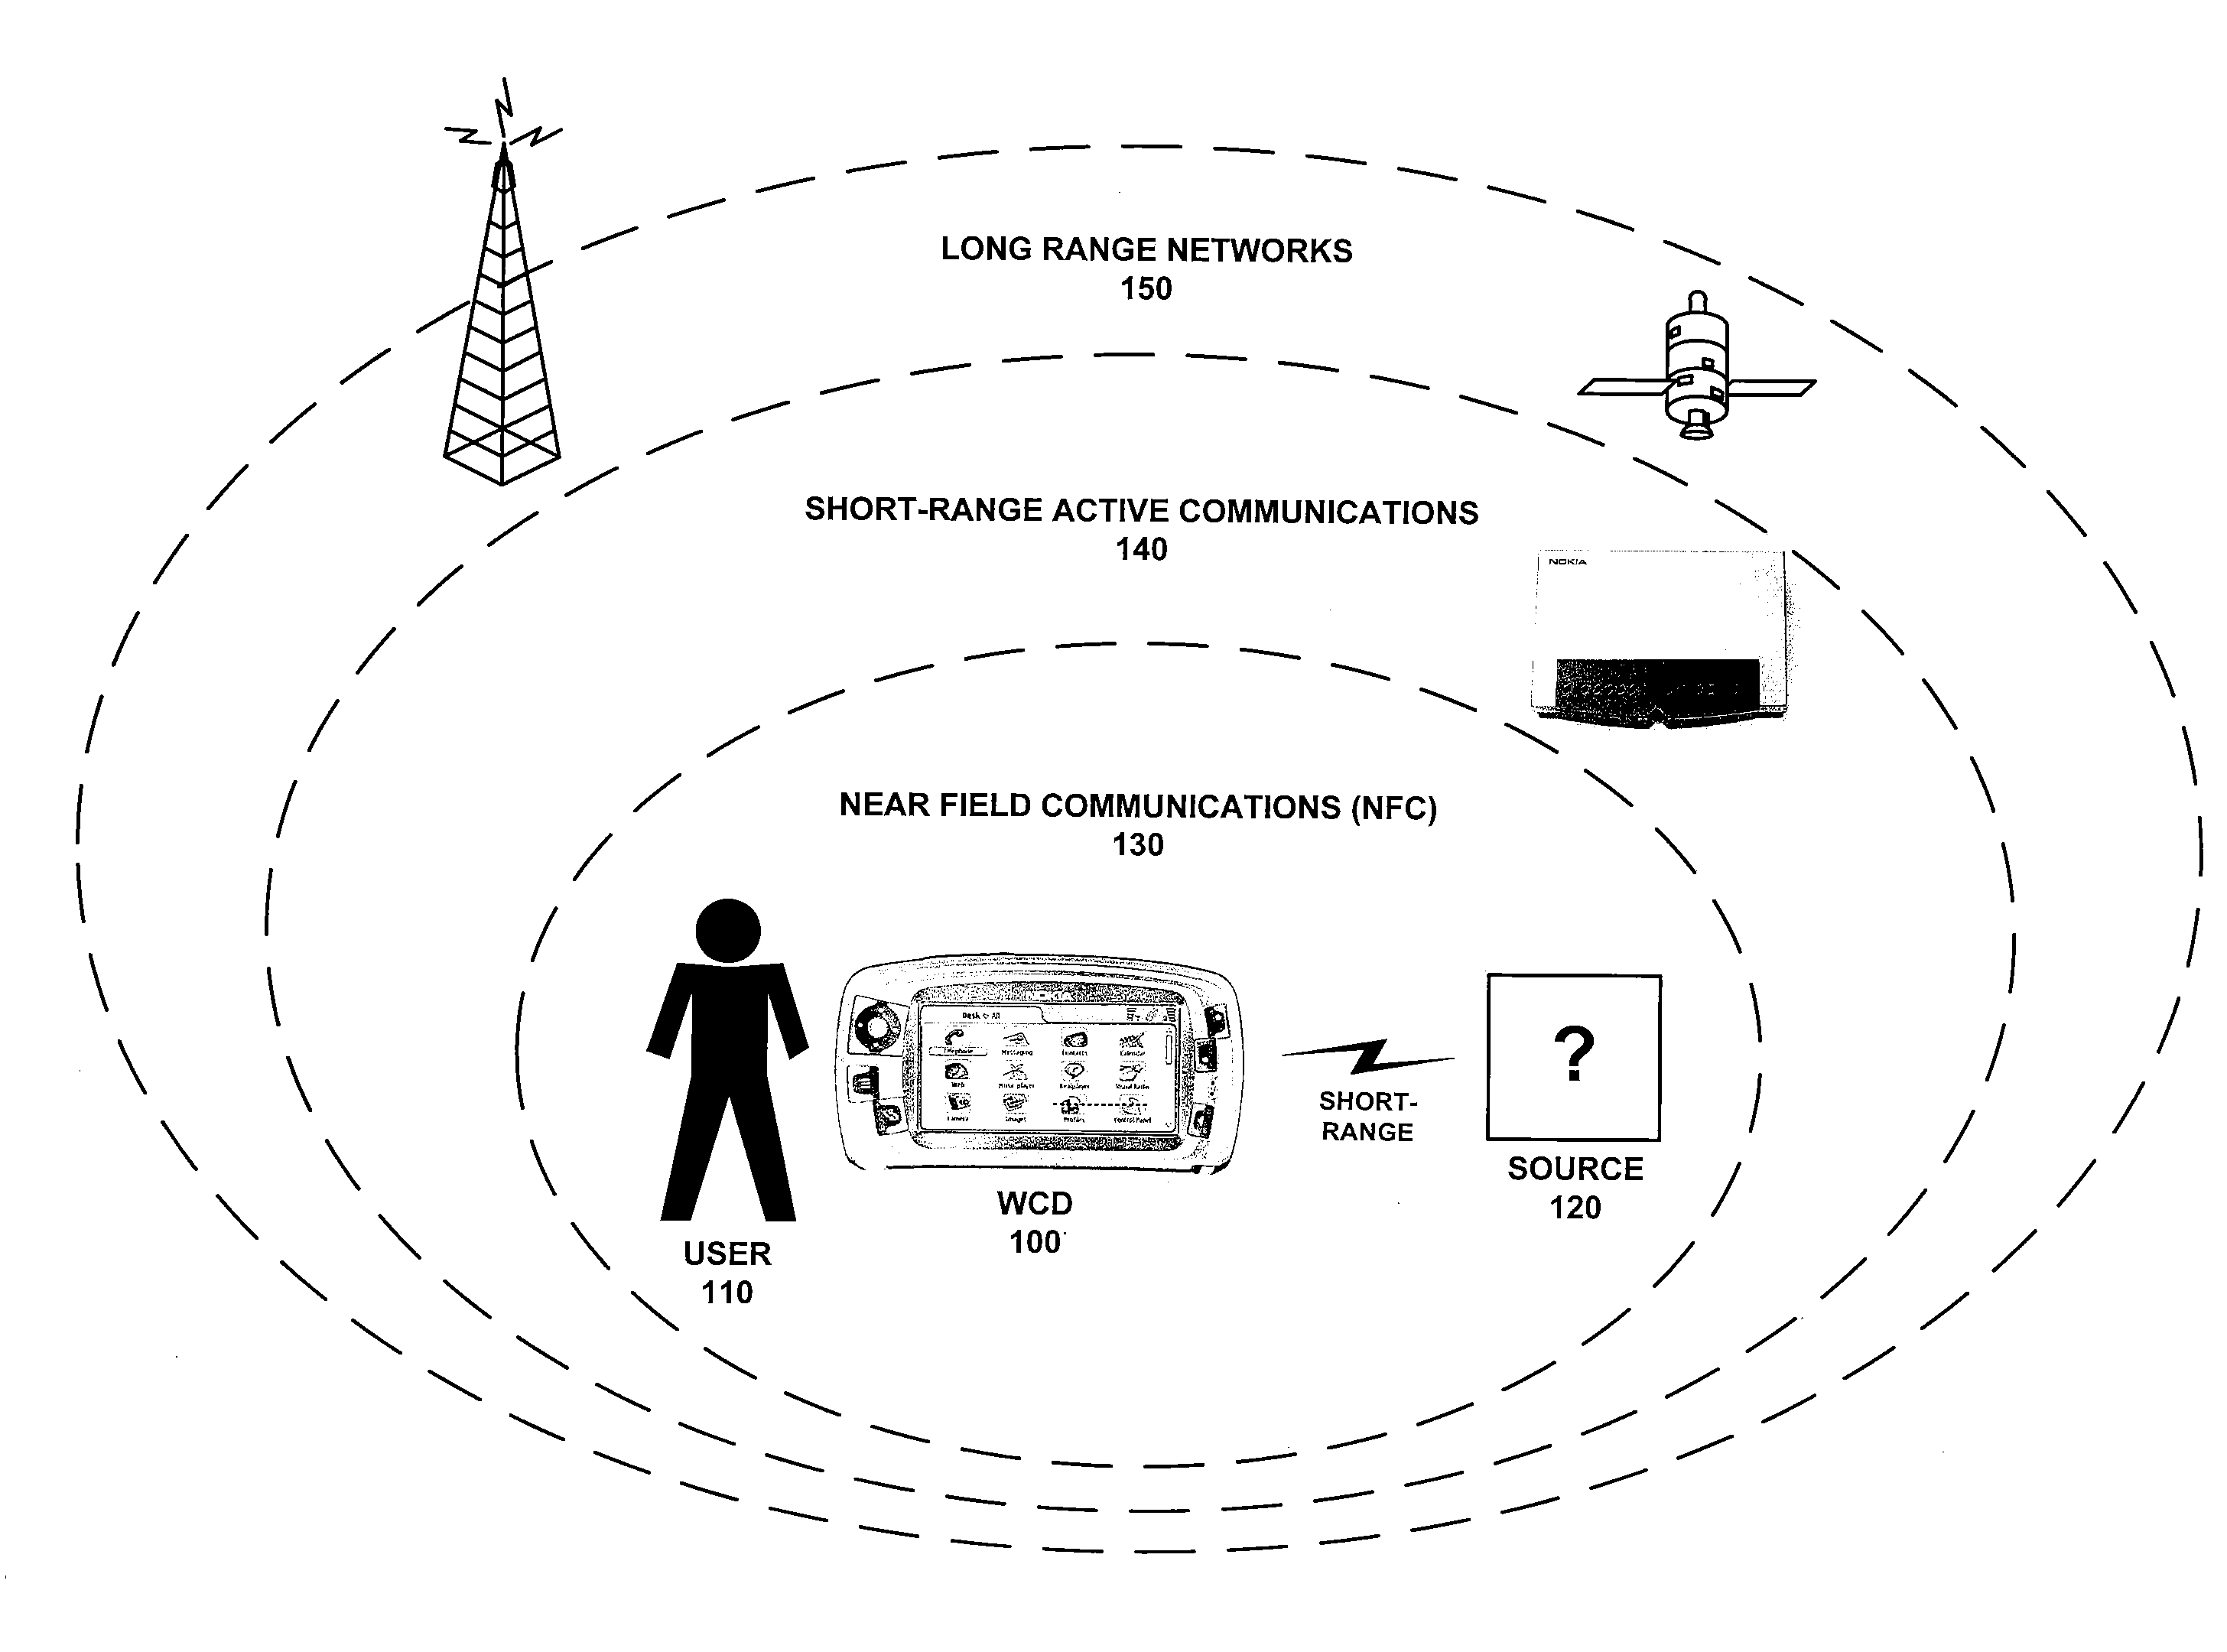 Multiradio priority control based on modem buffer load